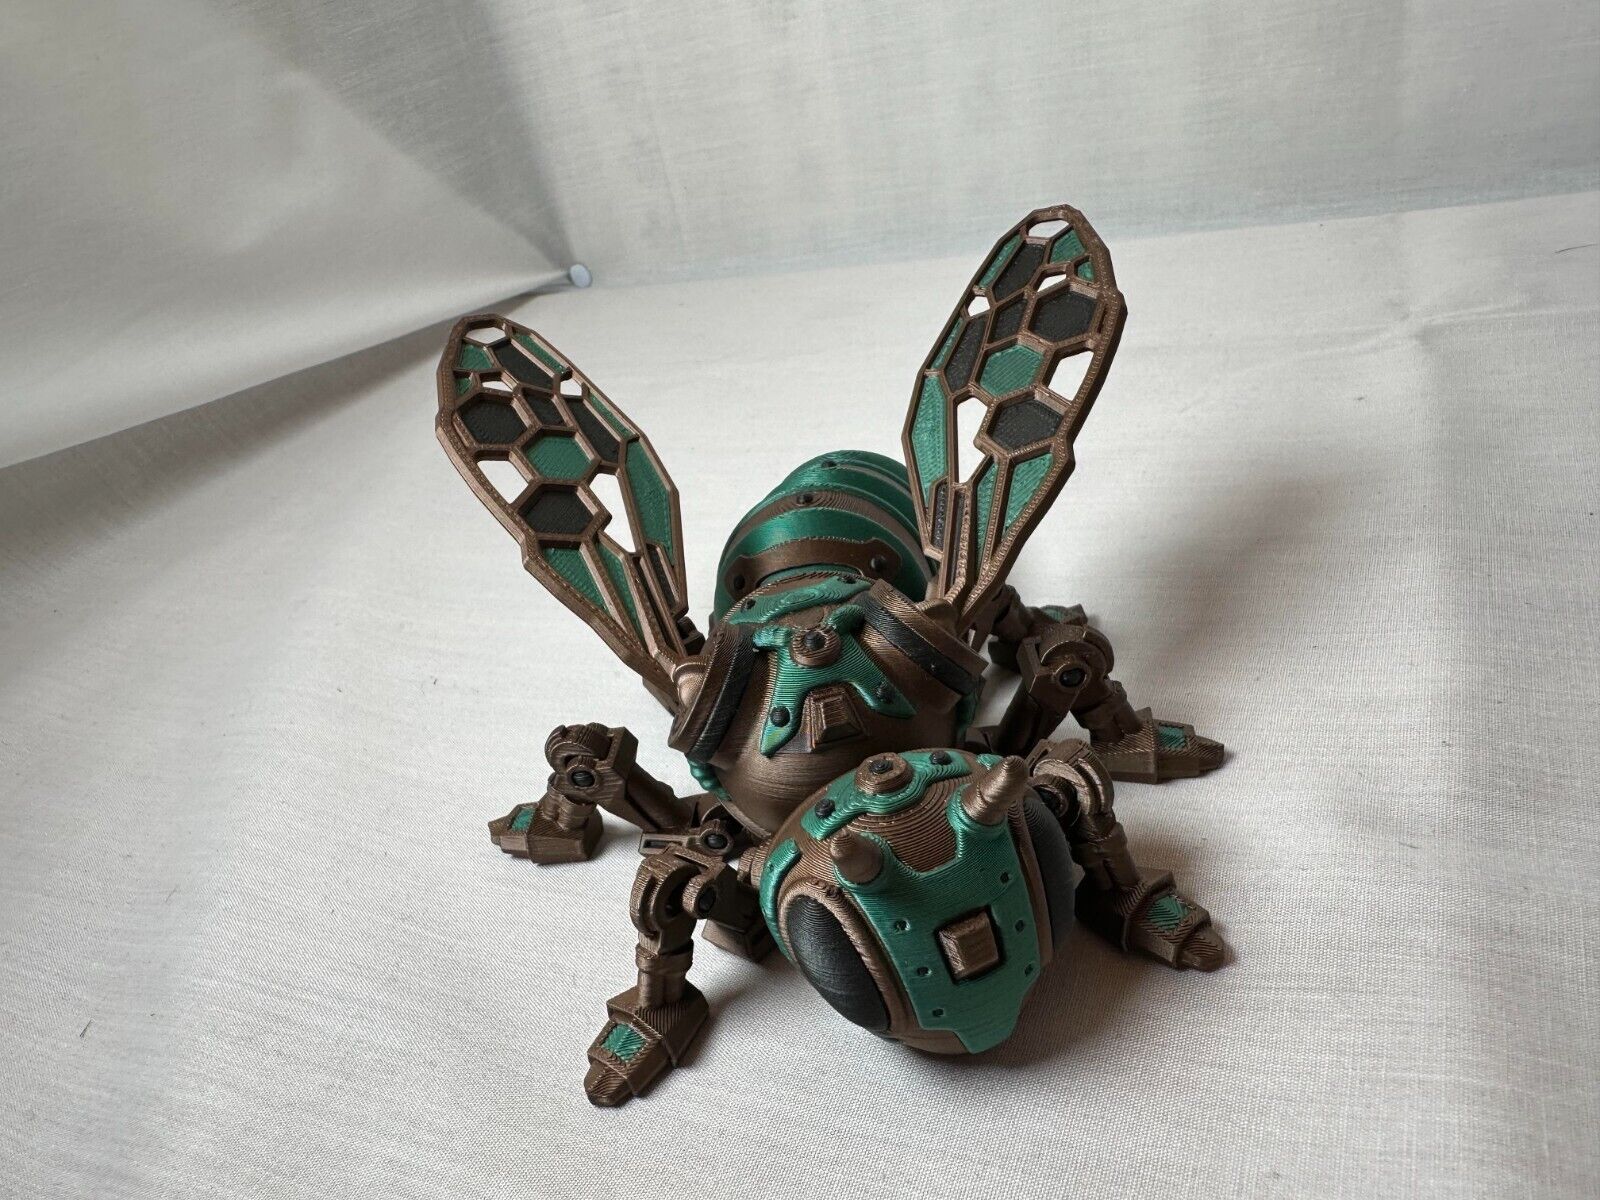 3D Articulating Cyber Bee Decorative Figurine Fidget